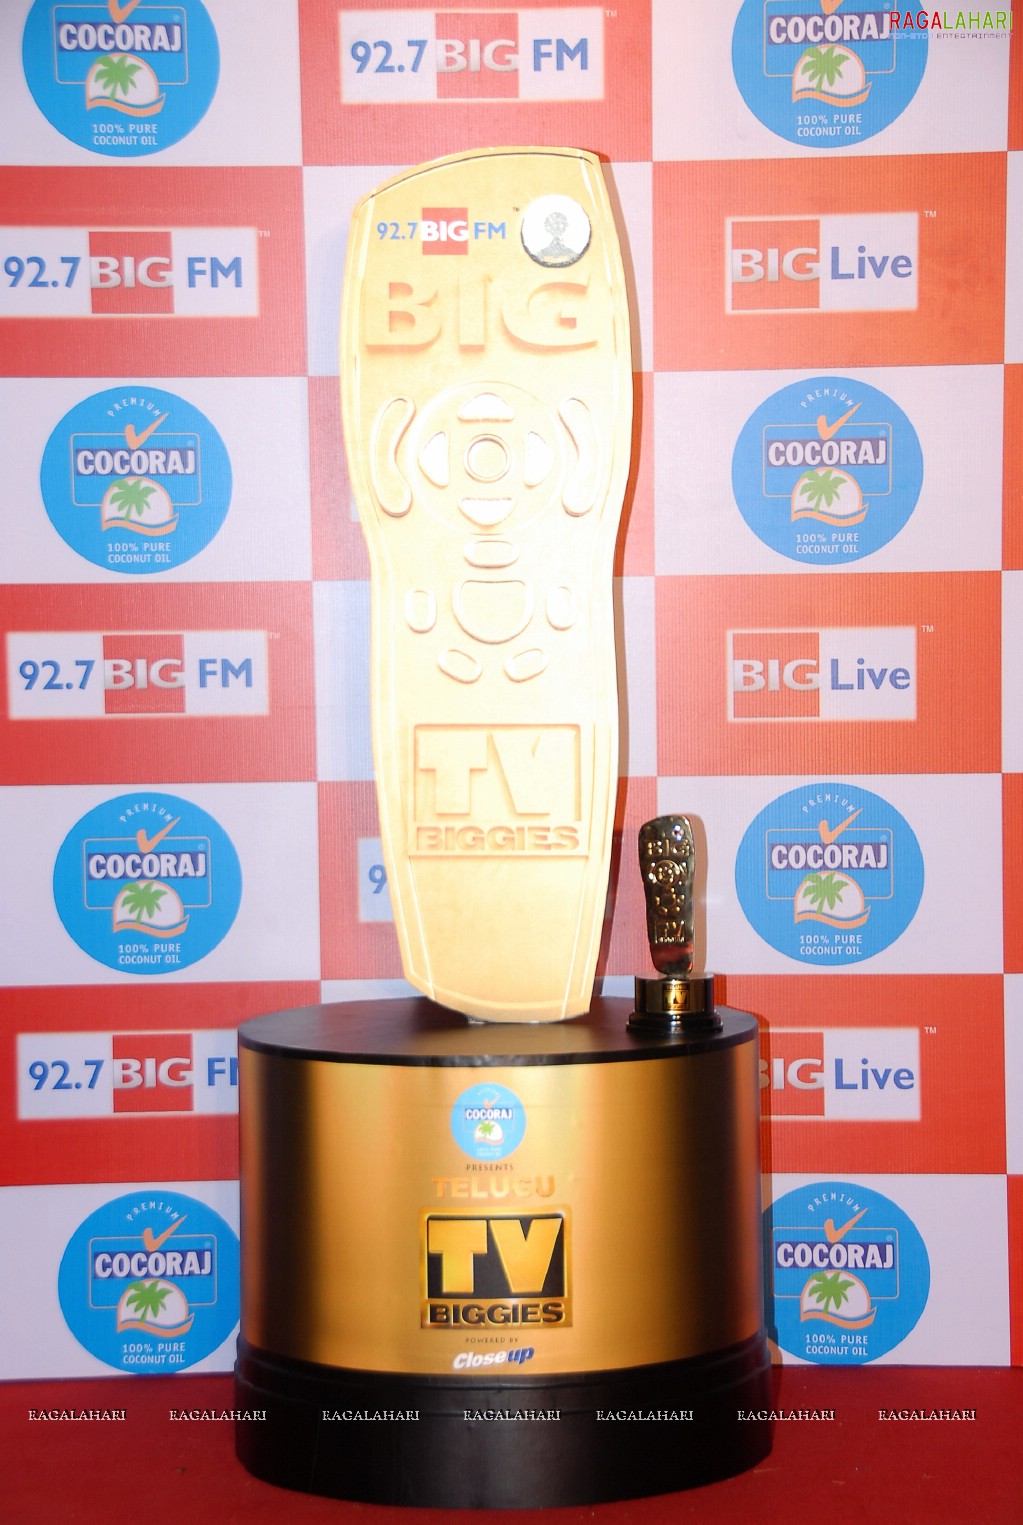 Telugu TV Biggies Launch